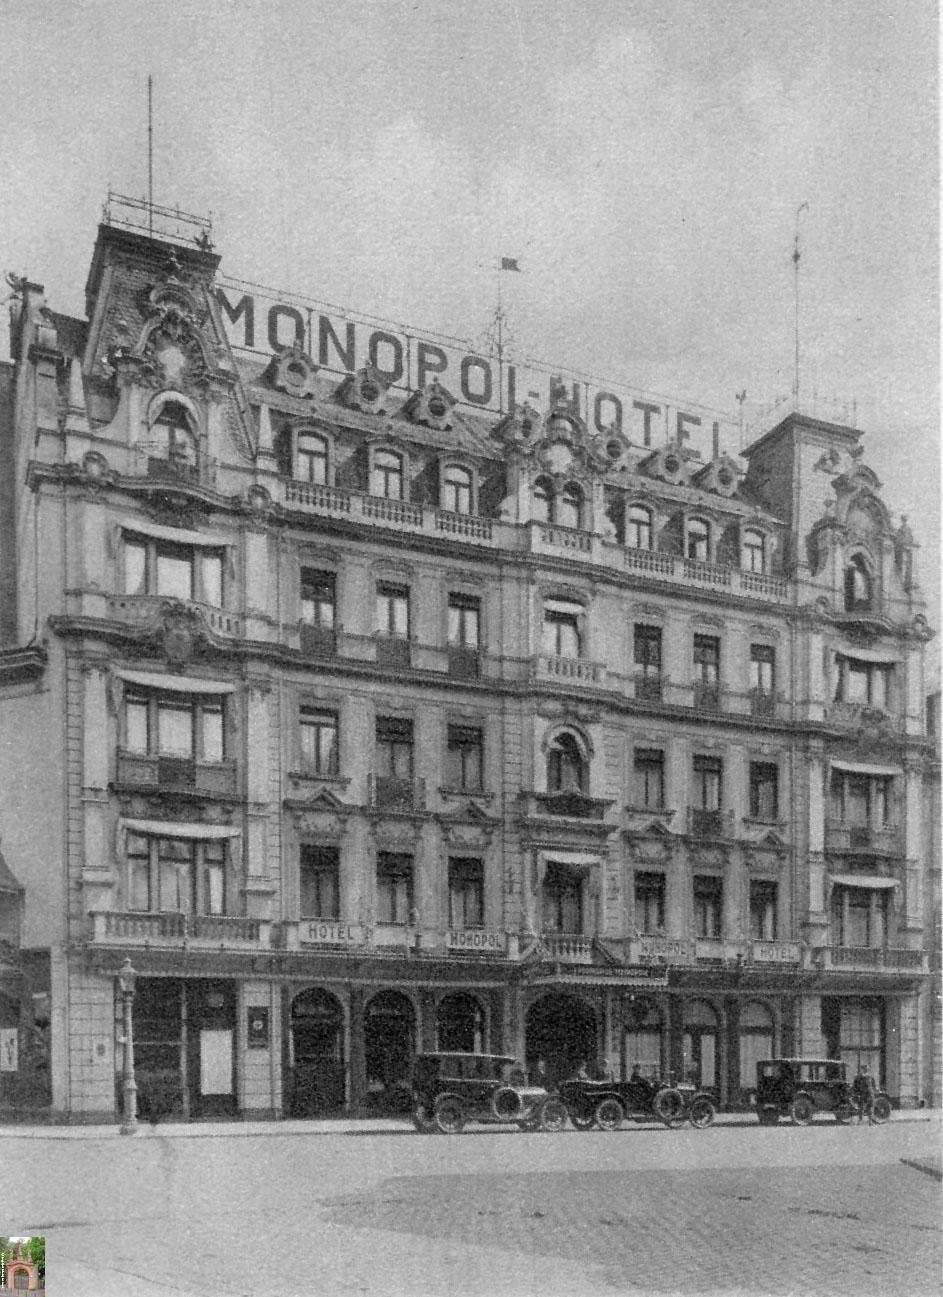 Schlossstraße _46_Monopol Hotel